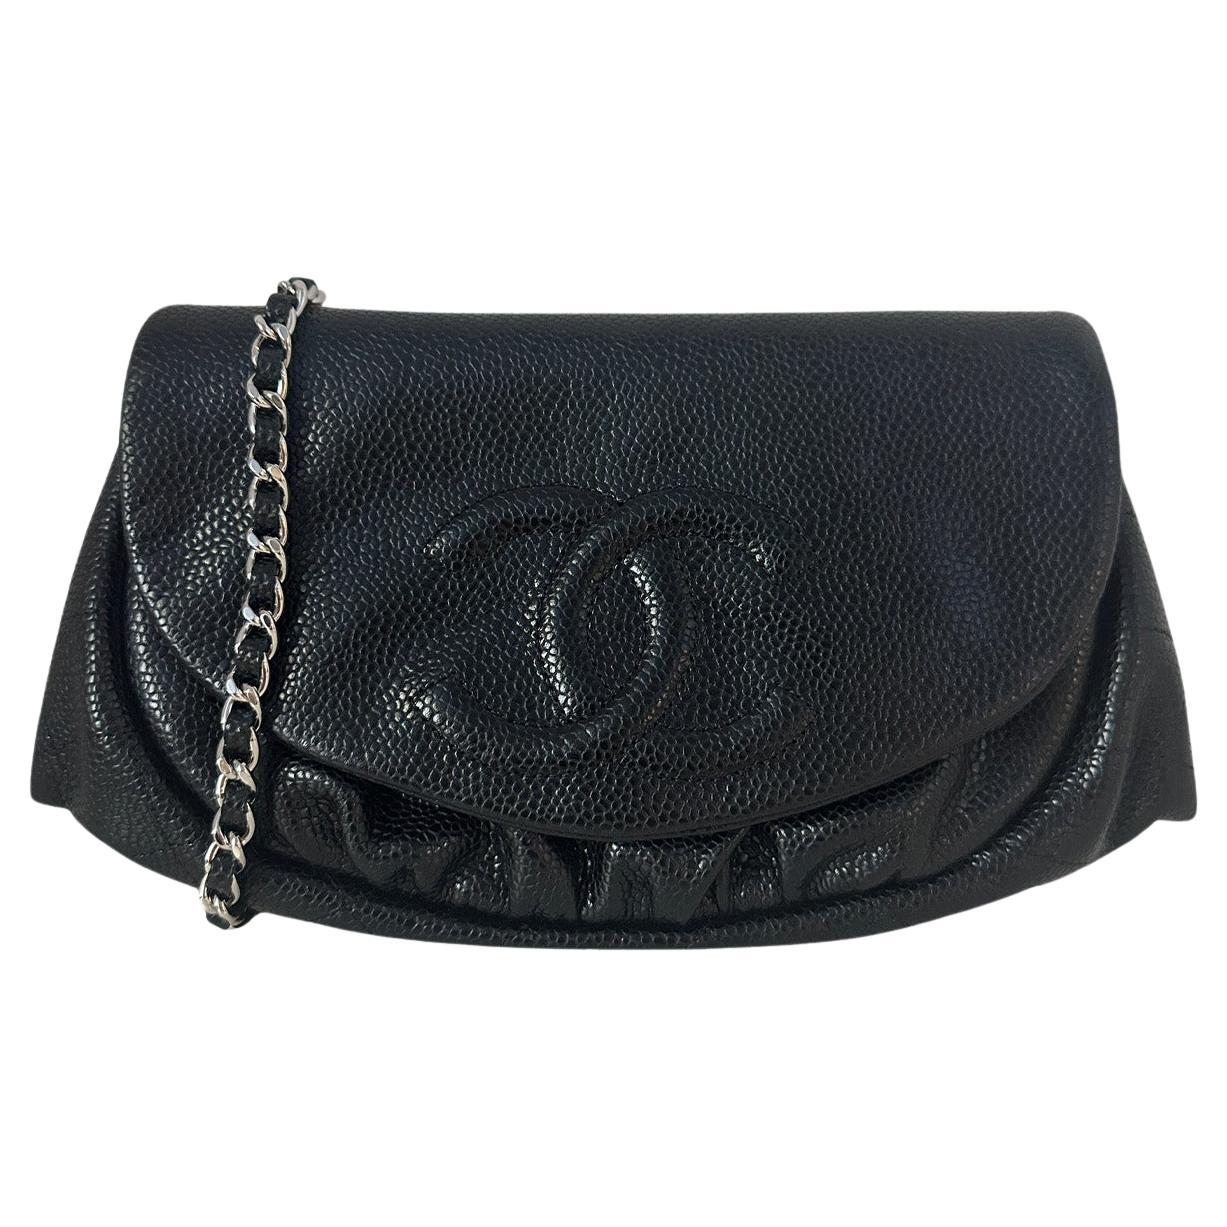 Chanel Black Caviar Leather Half Moon Wallet On Chain WOC Crossbody Bag For Sale